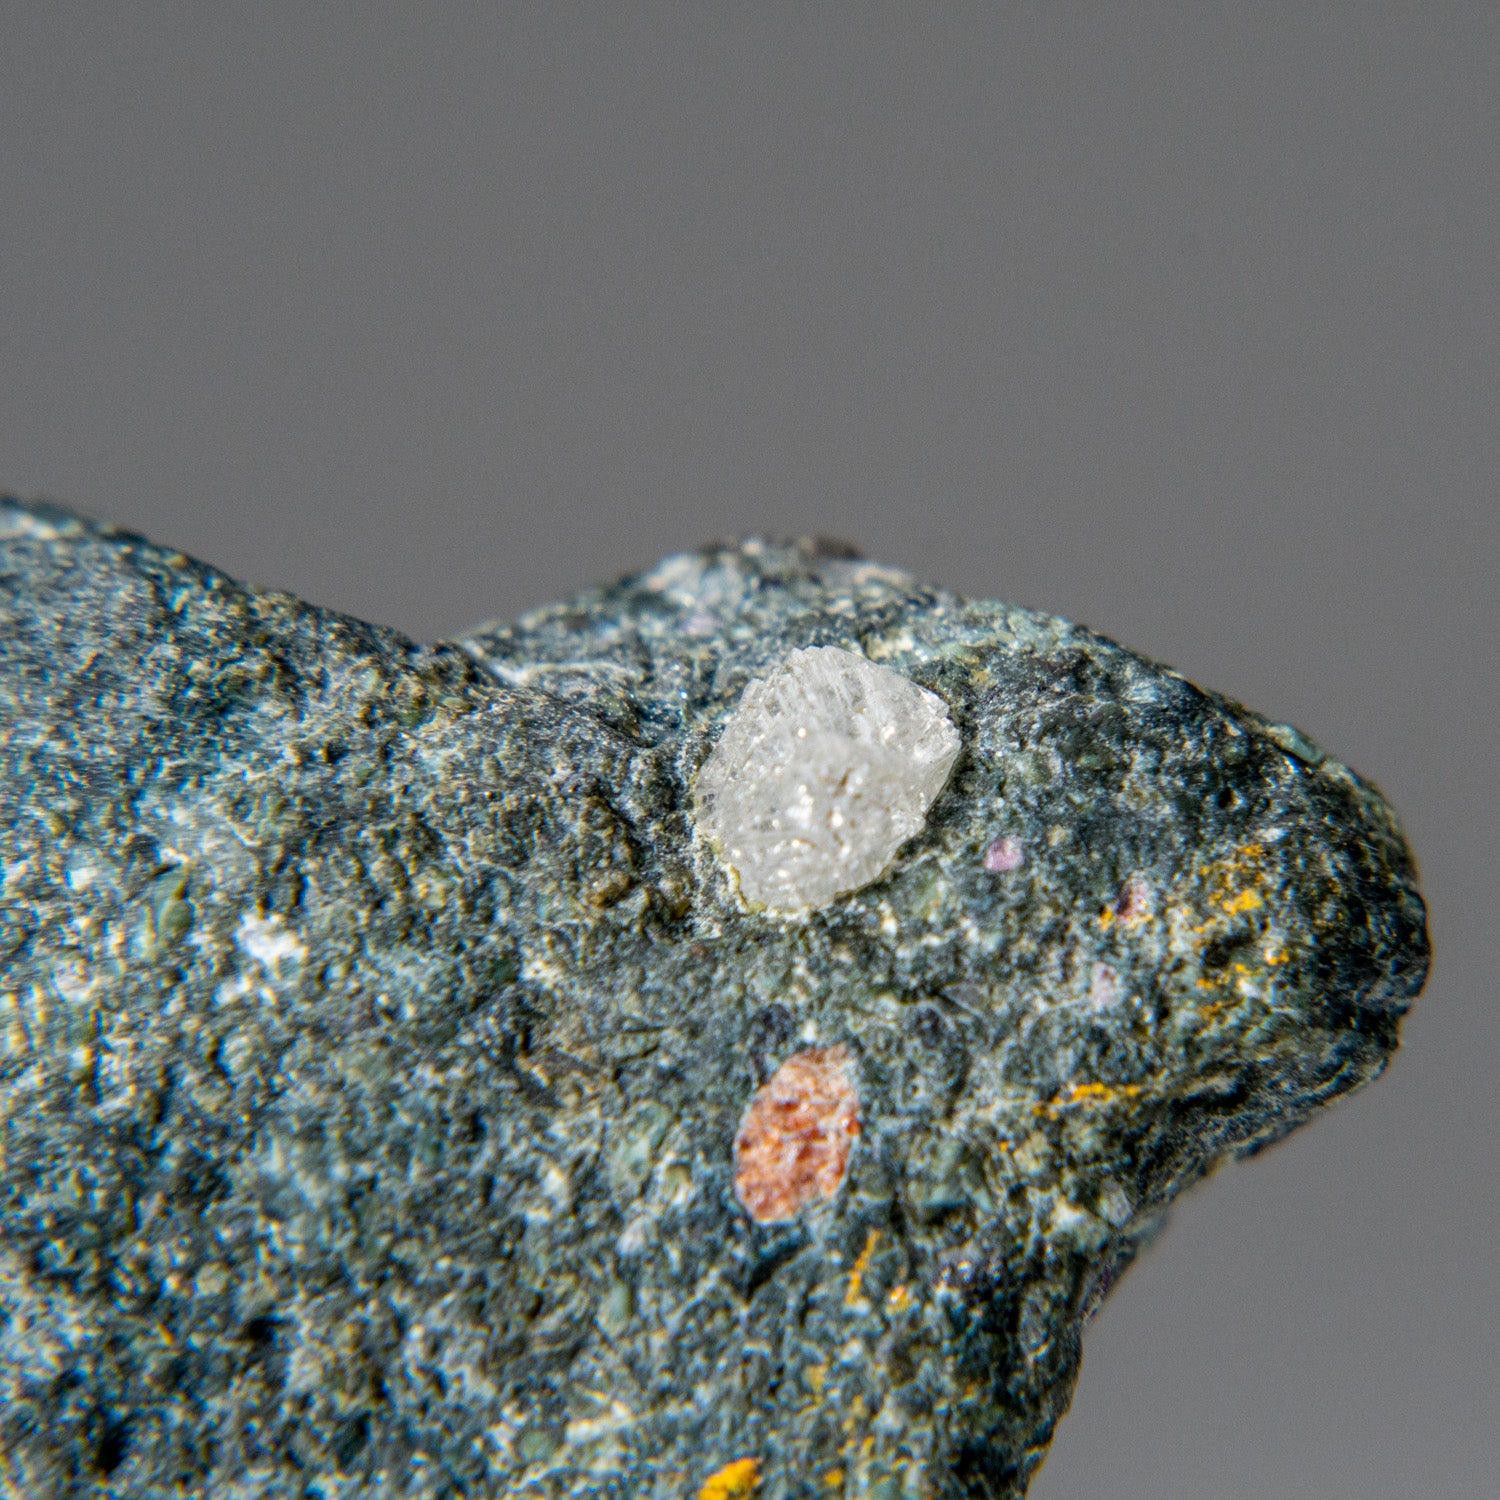 Diamond Crystal on Matrix from Mirna Pipe, Republic of Sakha (Yakutia), Siberia, Russia